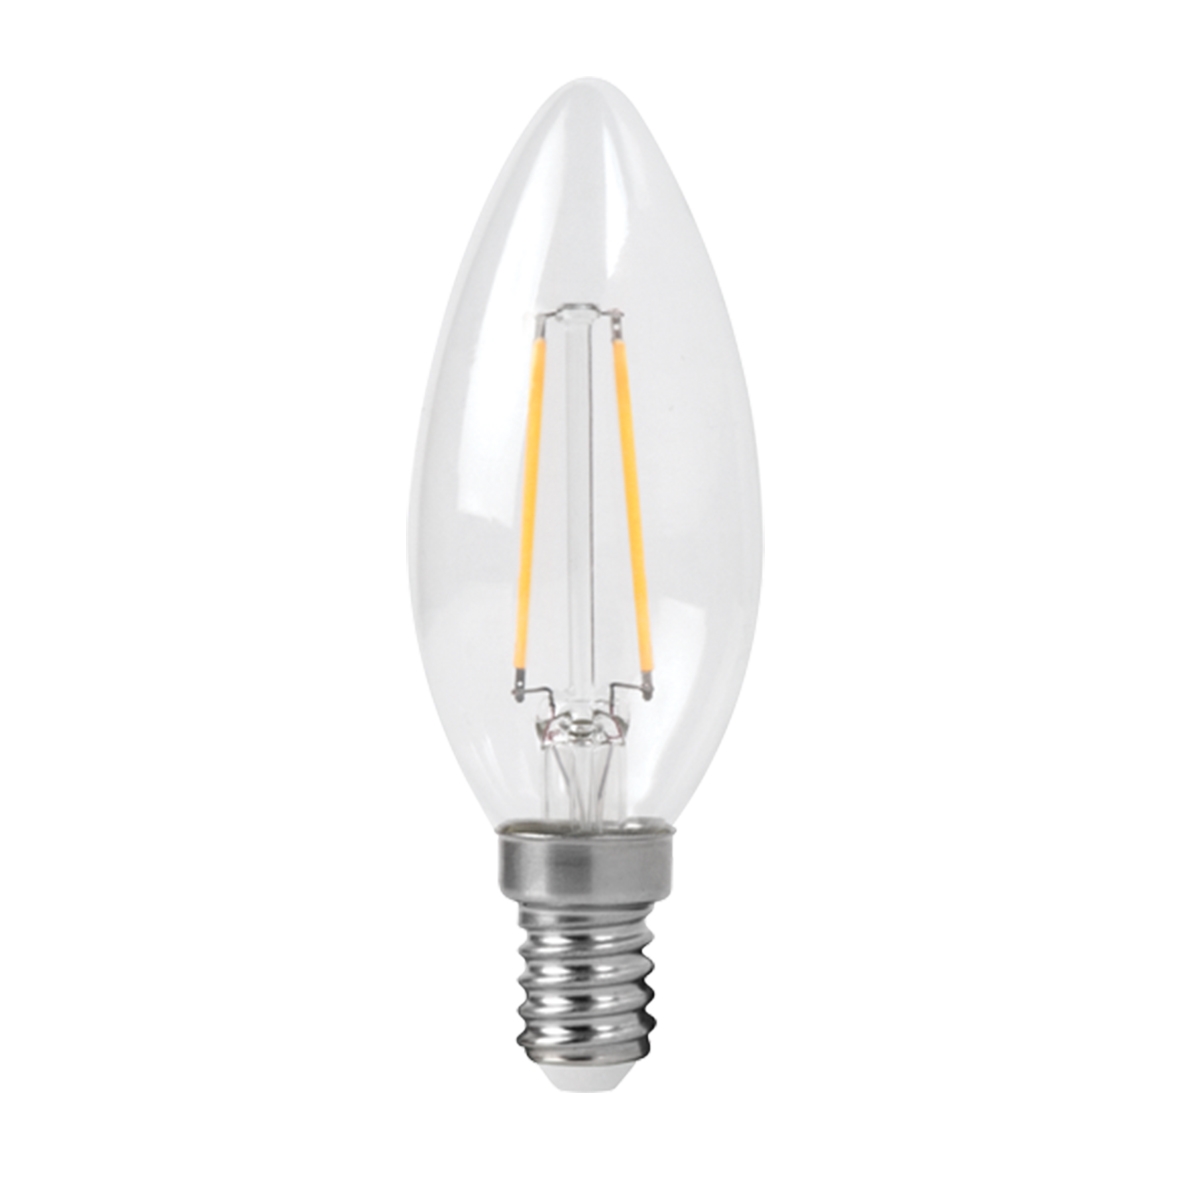 Megaman E14 LED Candle Filament Bulb LC1404CS-4W-E14 2700K - Warm White 